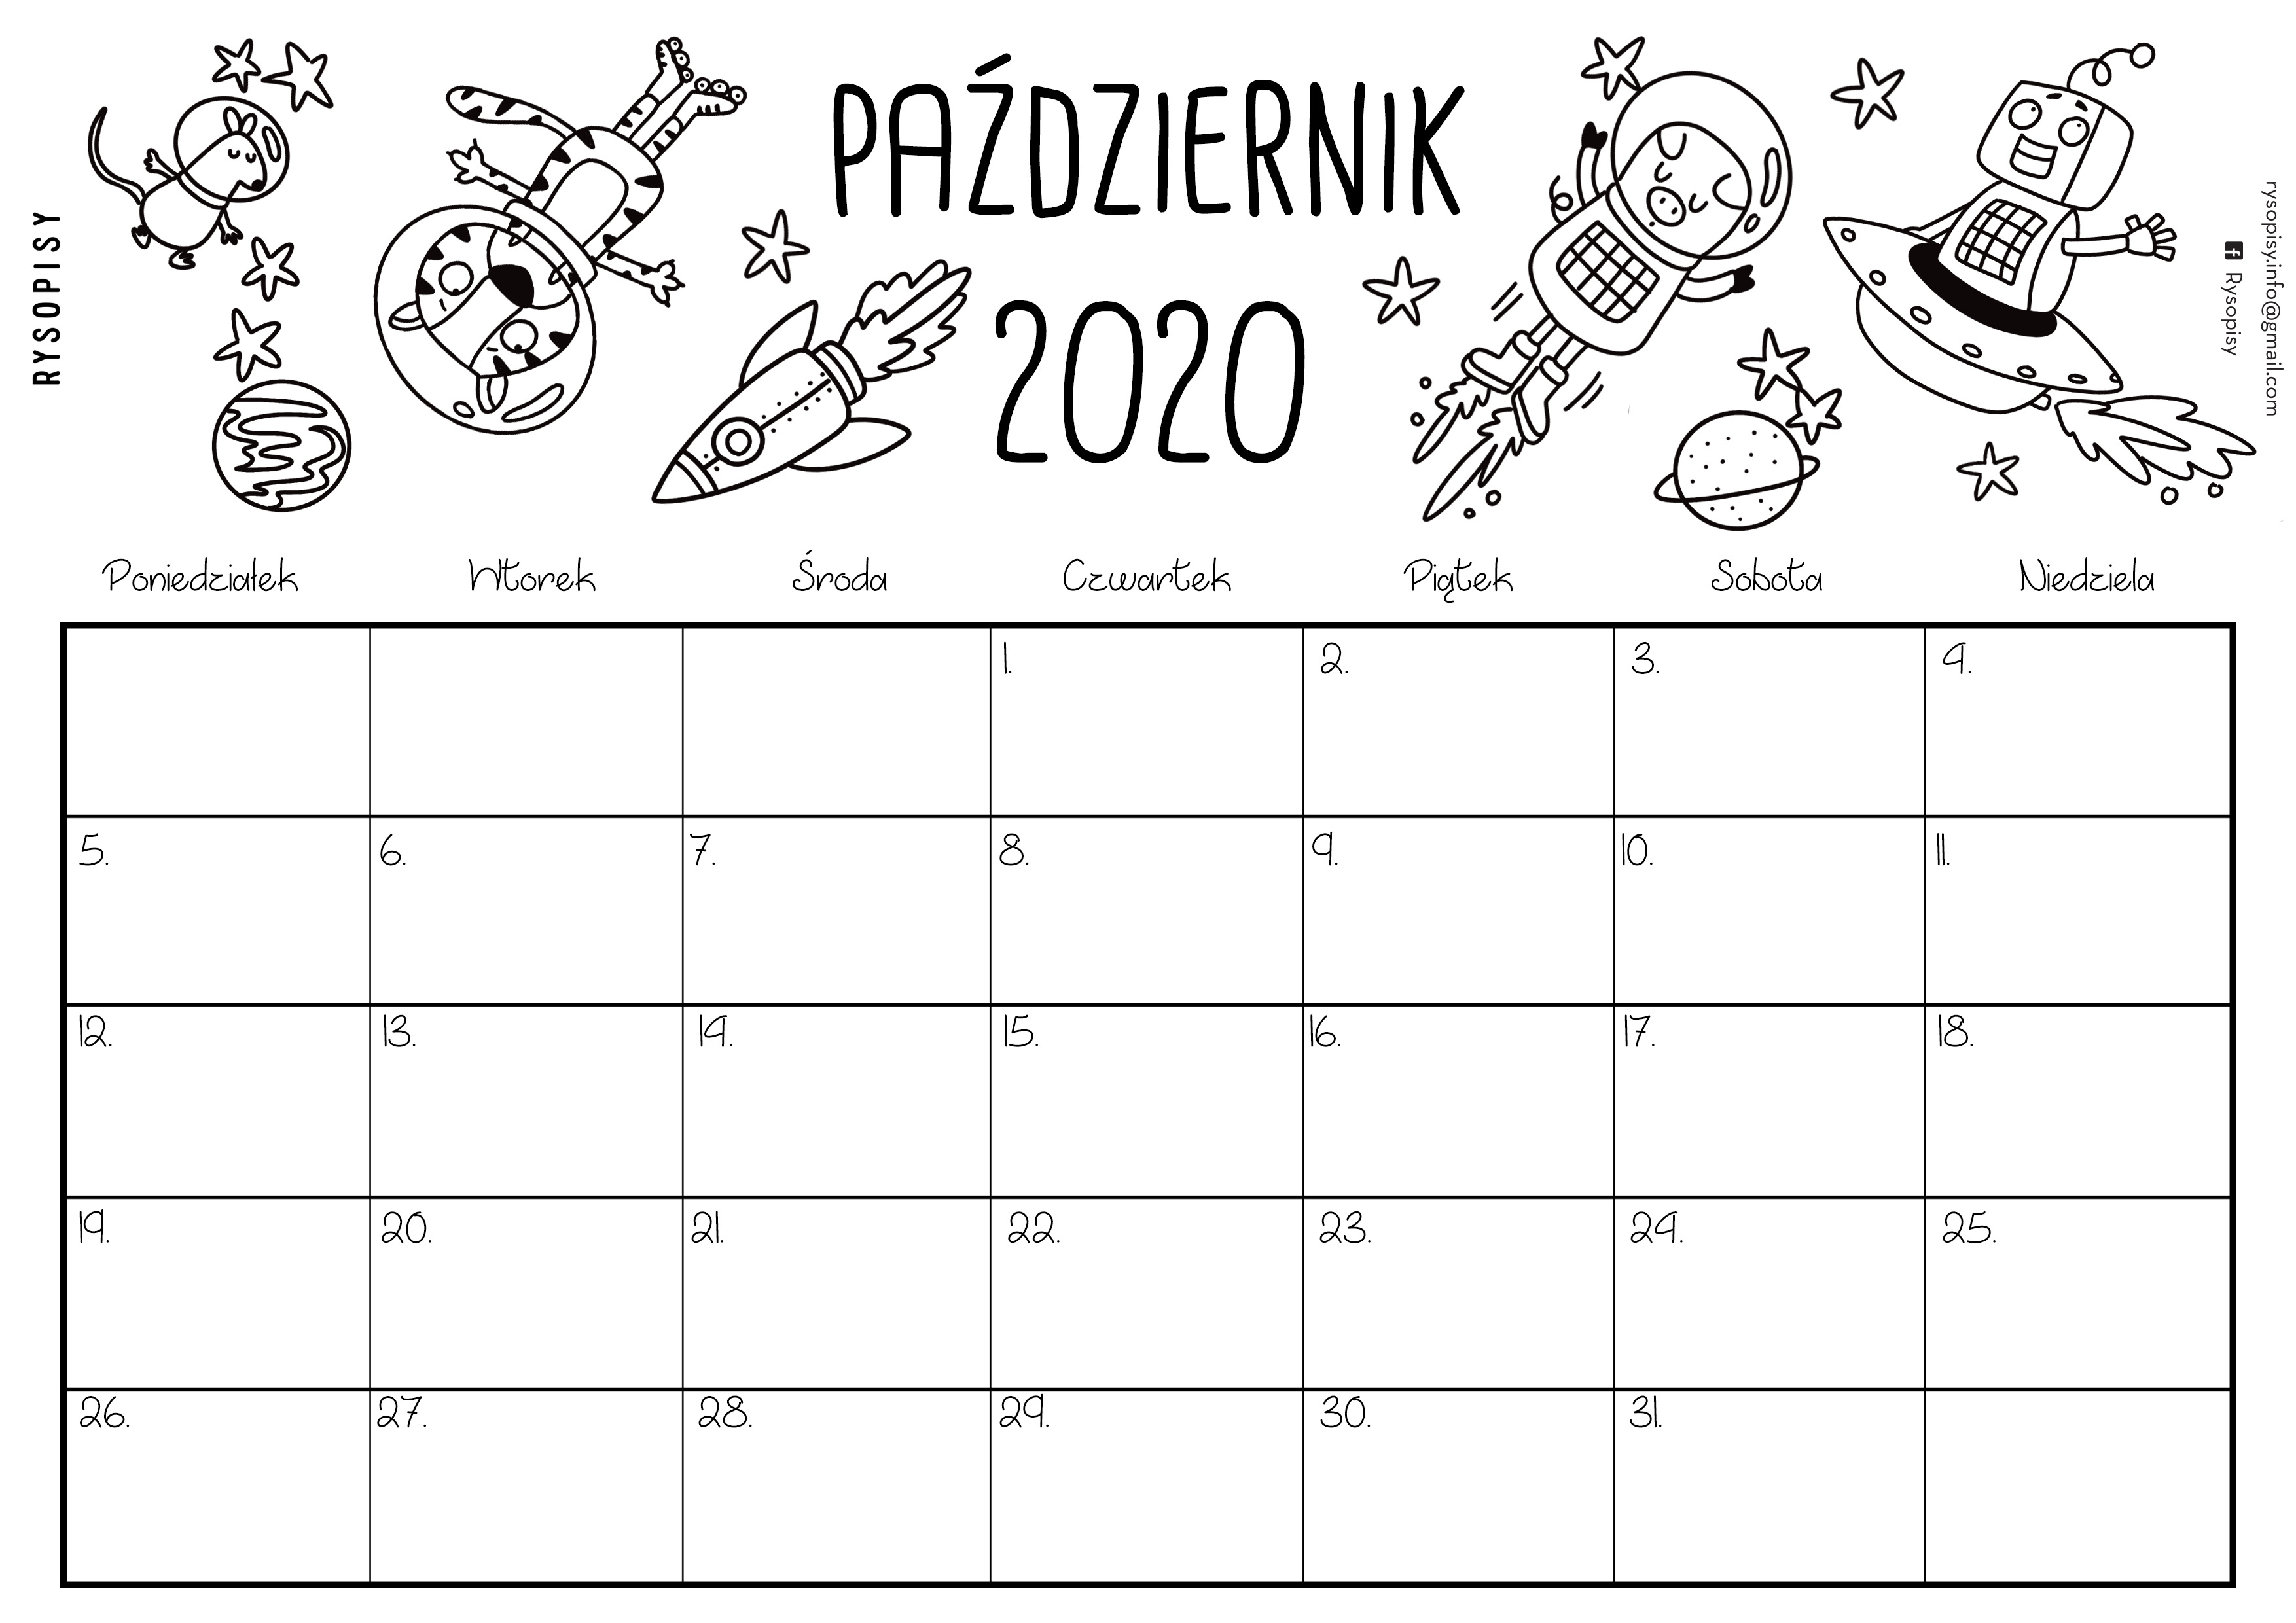 Kalendarz- październik 2020